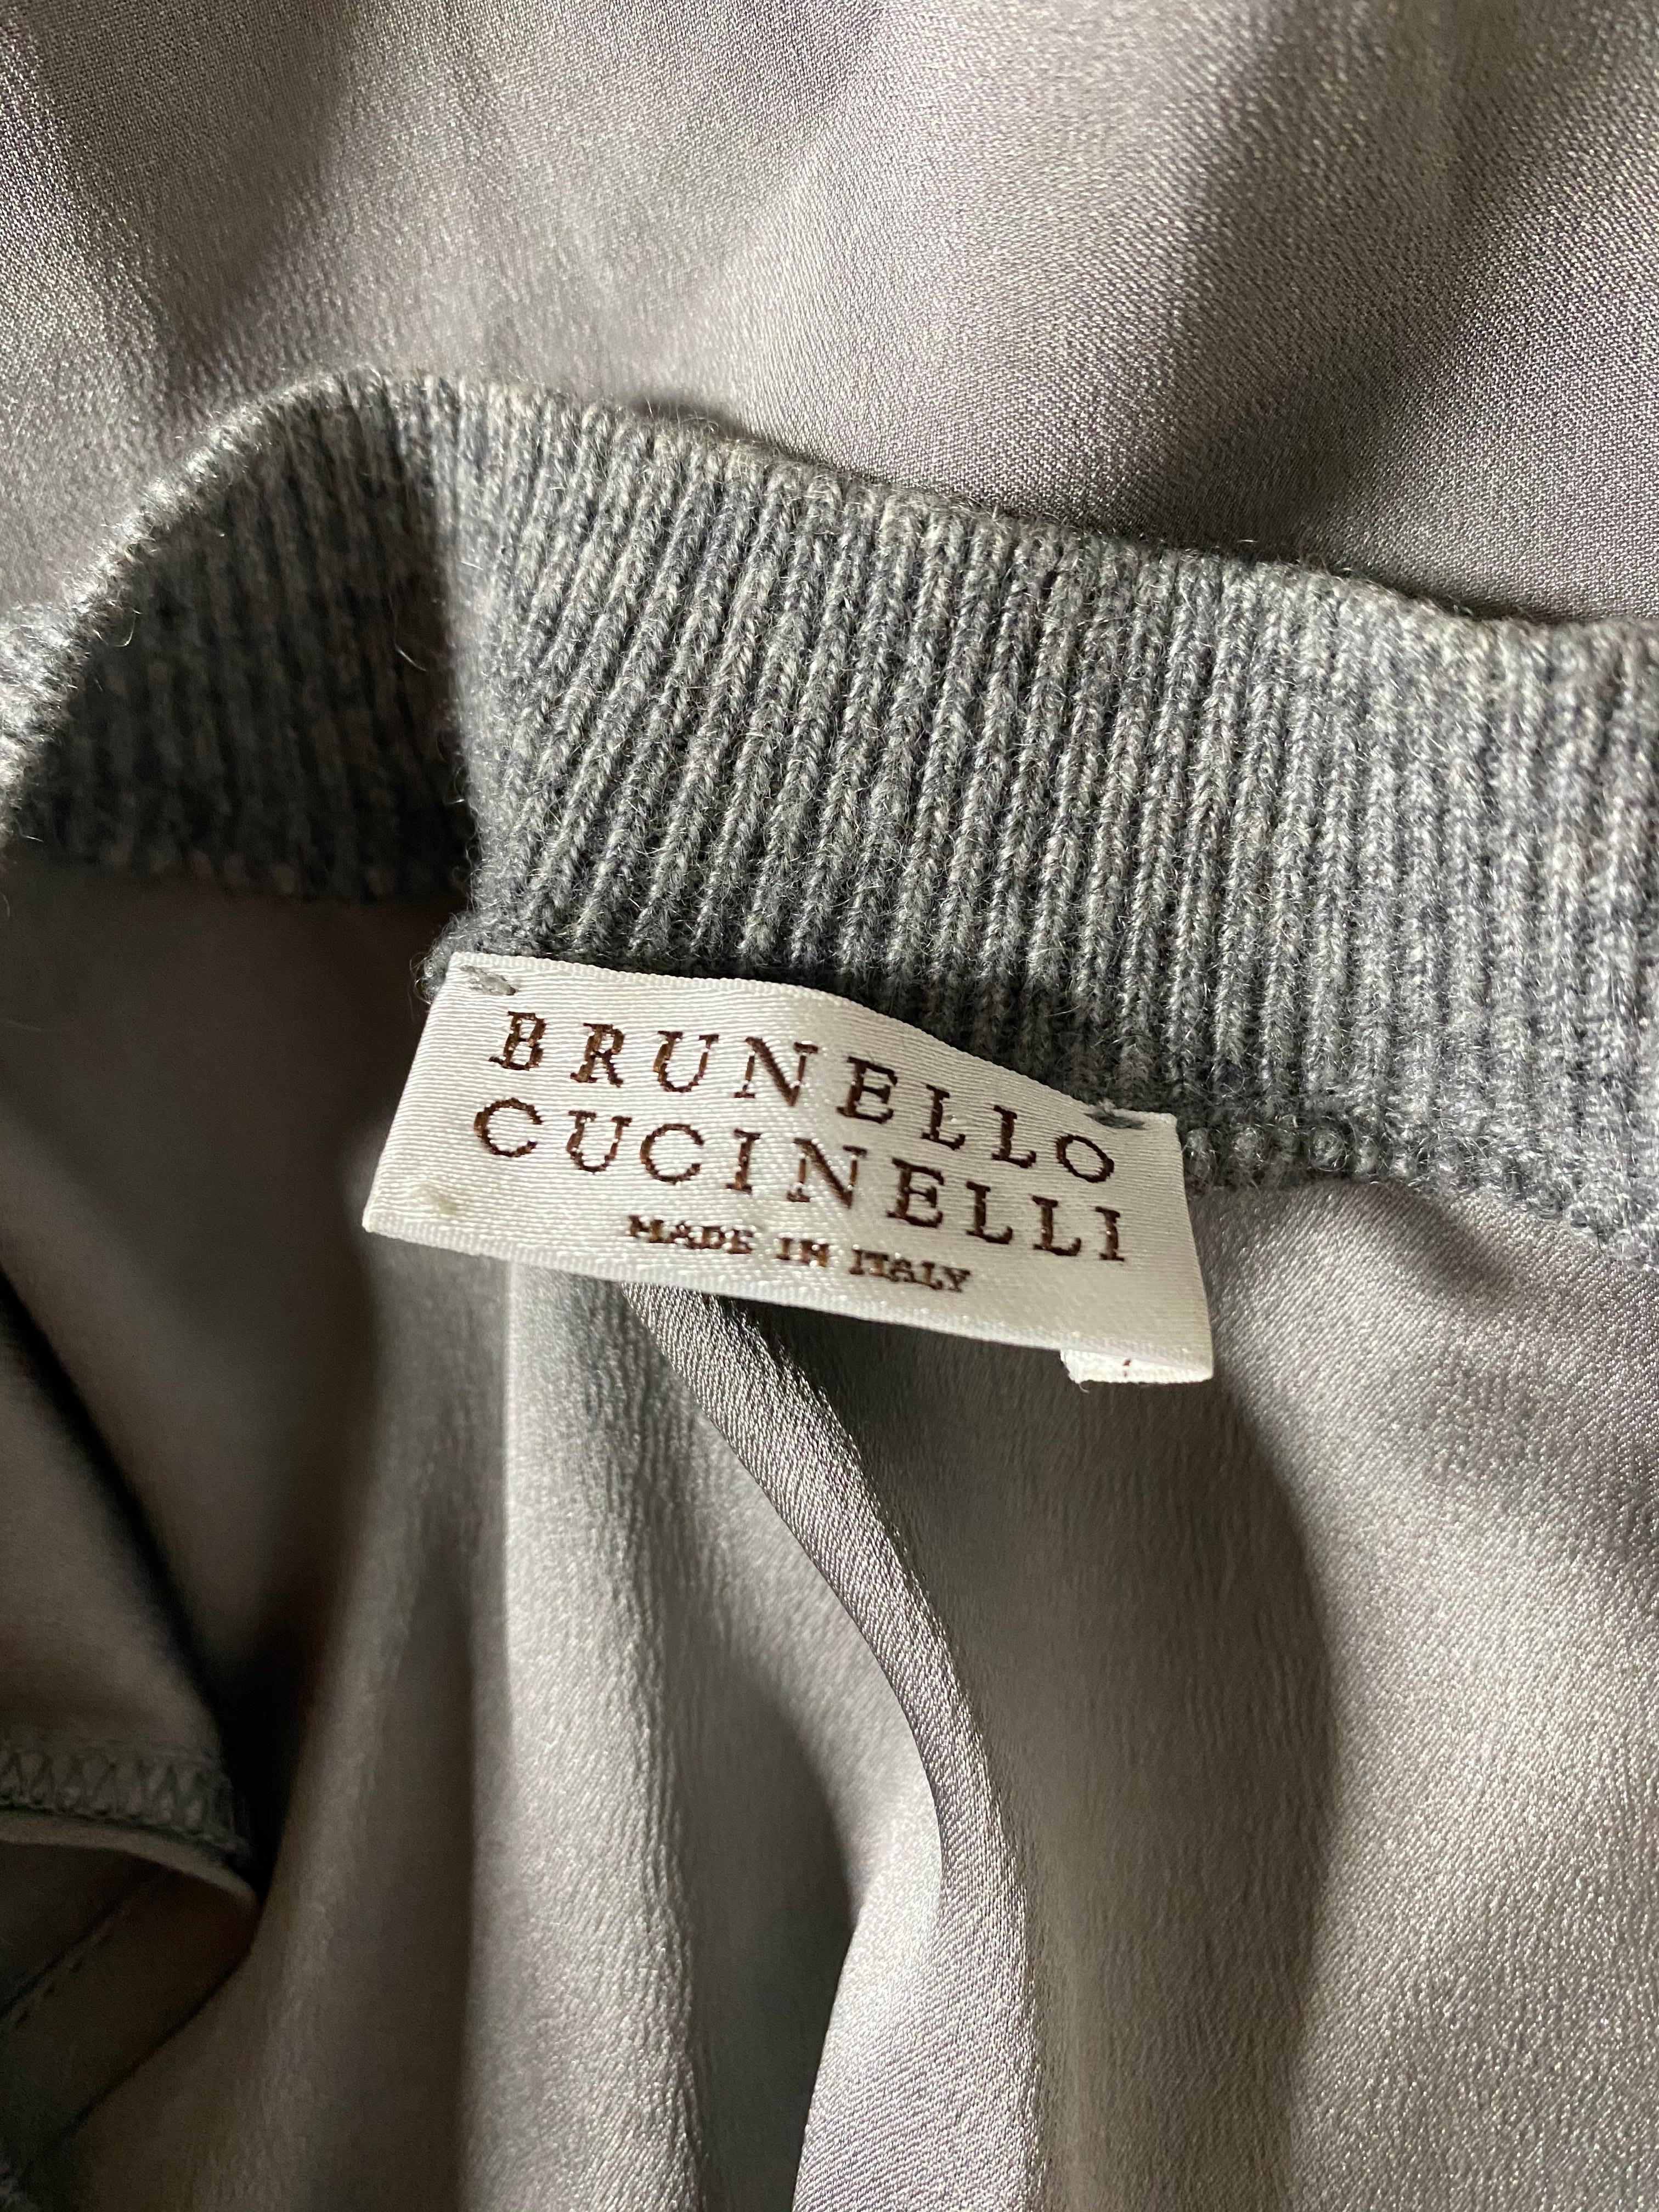 Brunello Cucinelli Grey Silk Sleeveless Blouse Top Size XL For Sale 2